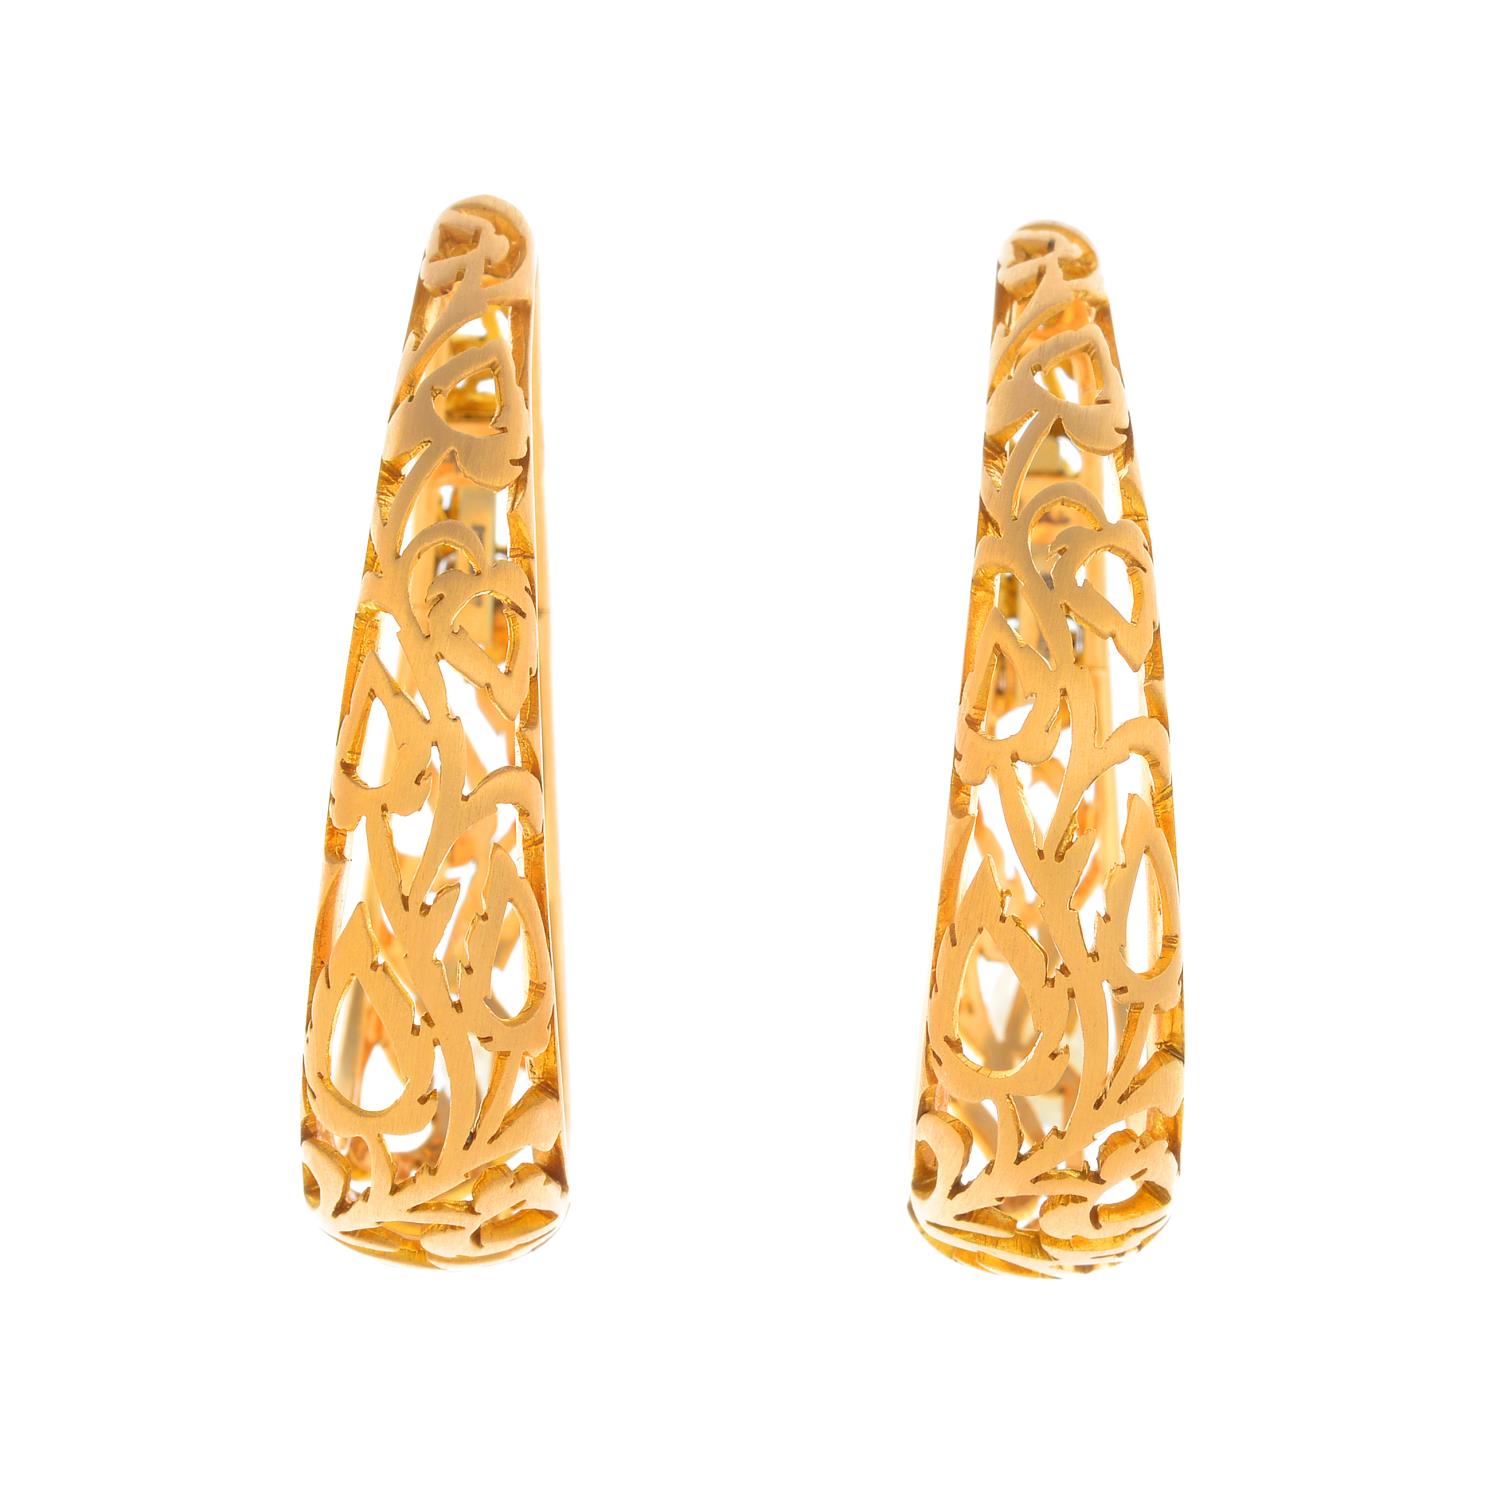 POMELLATO - a pair of 18ct gold 'Arabesque' earrings.